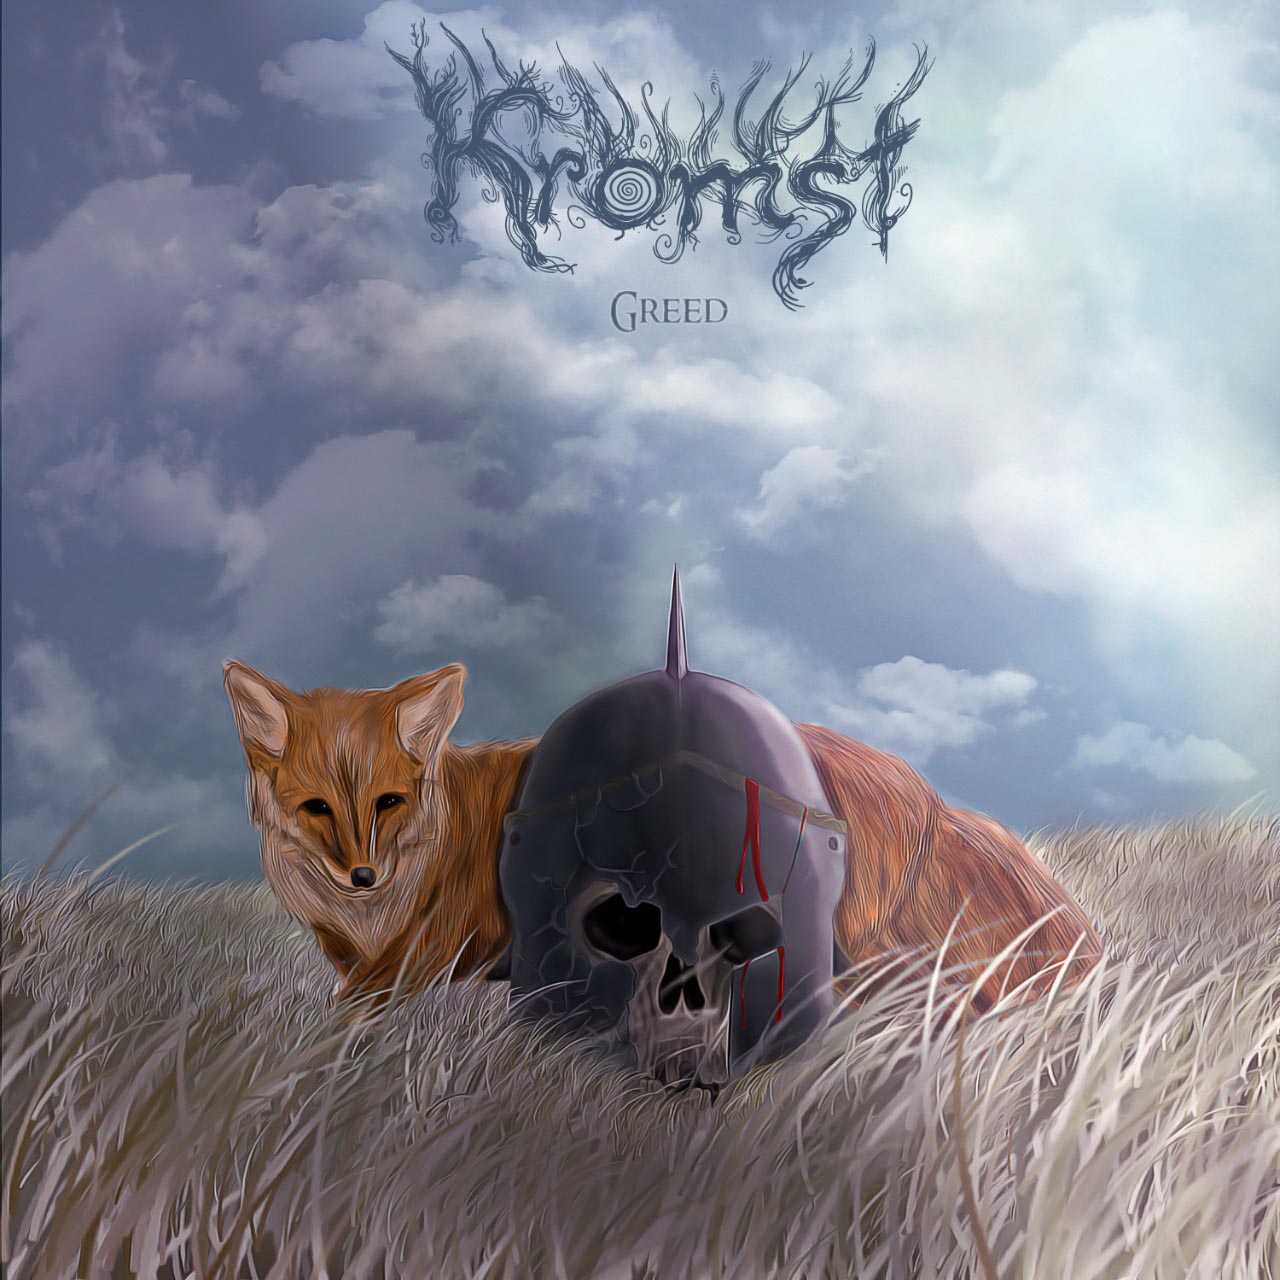 KROMST - Greed cover 